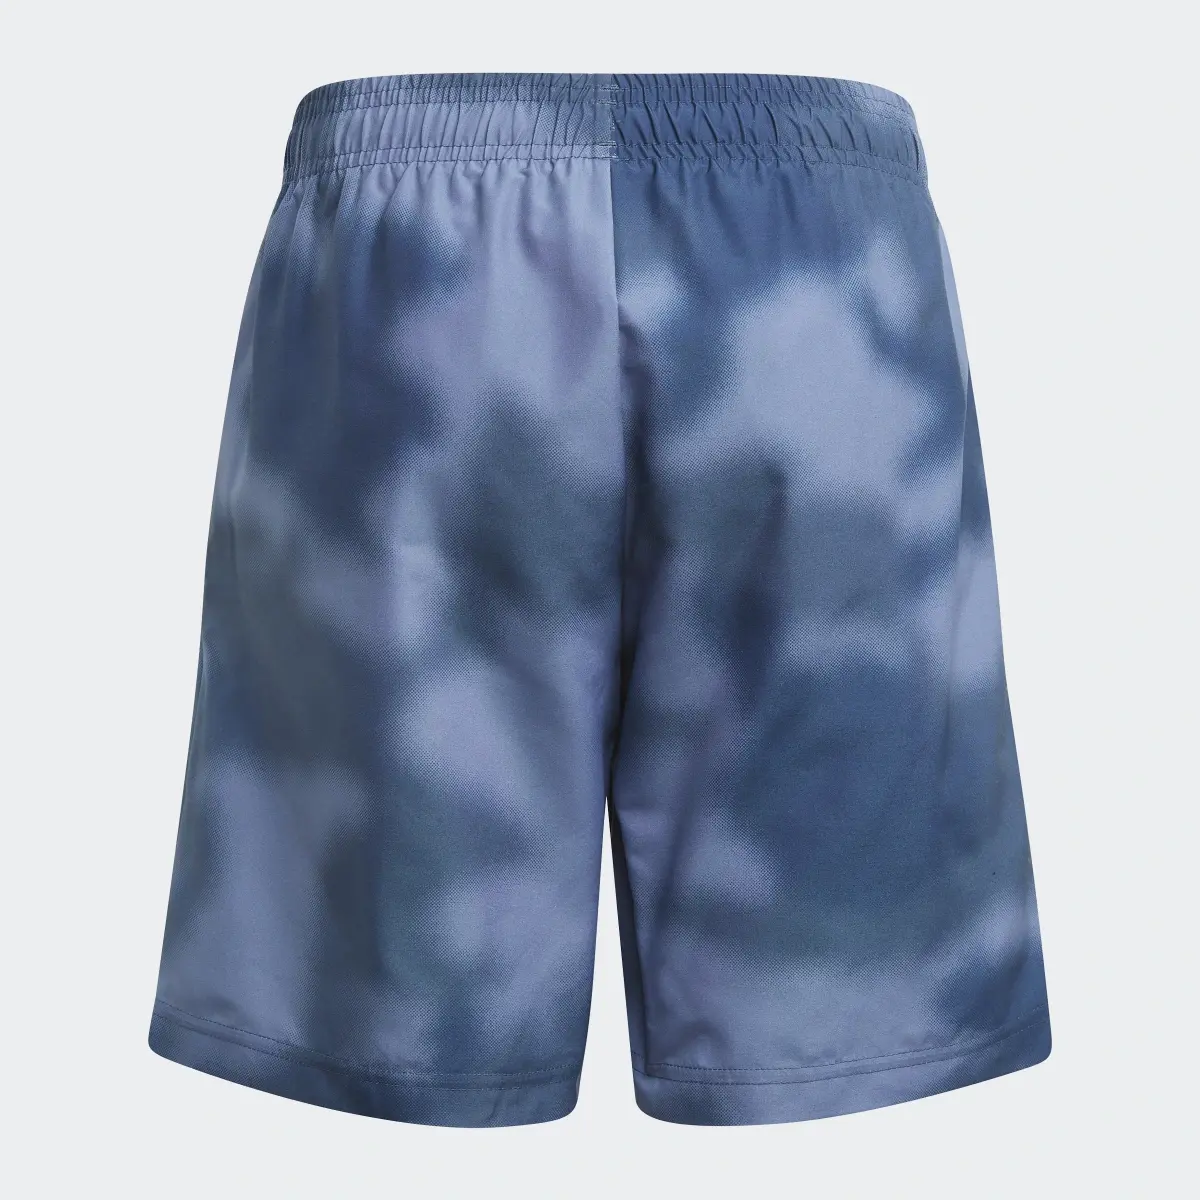 Adidas Allover Print Camo Swim Shorts. 2